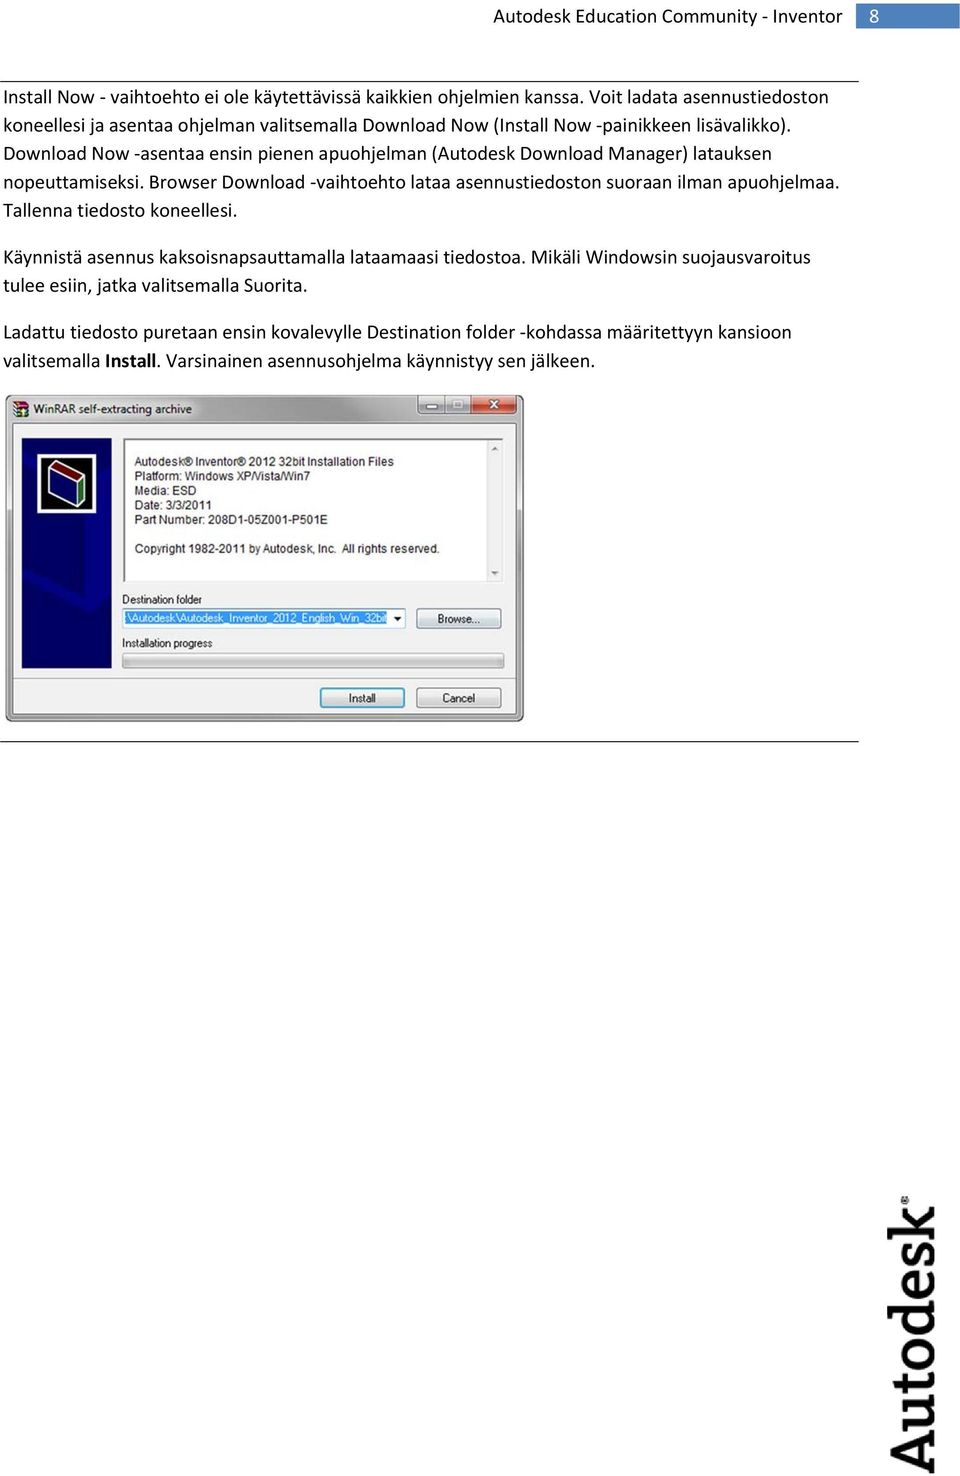 Download Now asentaa ensin pienen apuohjelman (Autodesk Download Manager) latauksen nopeuttamiseksi.